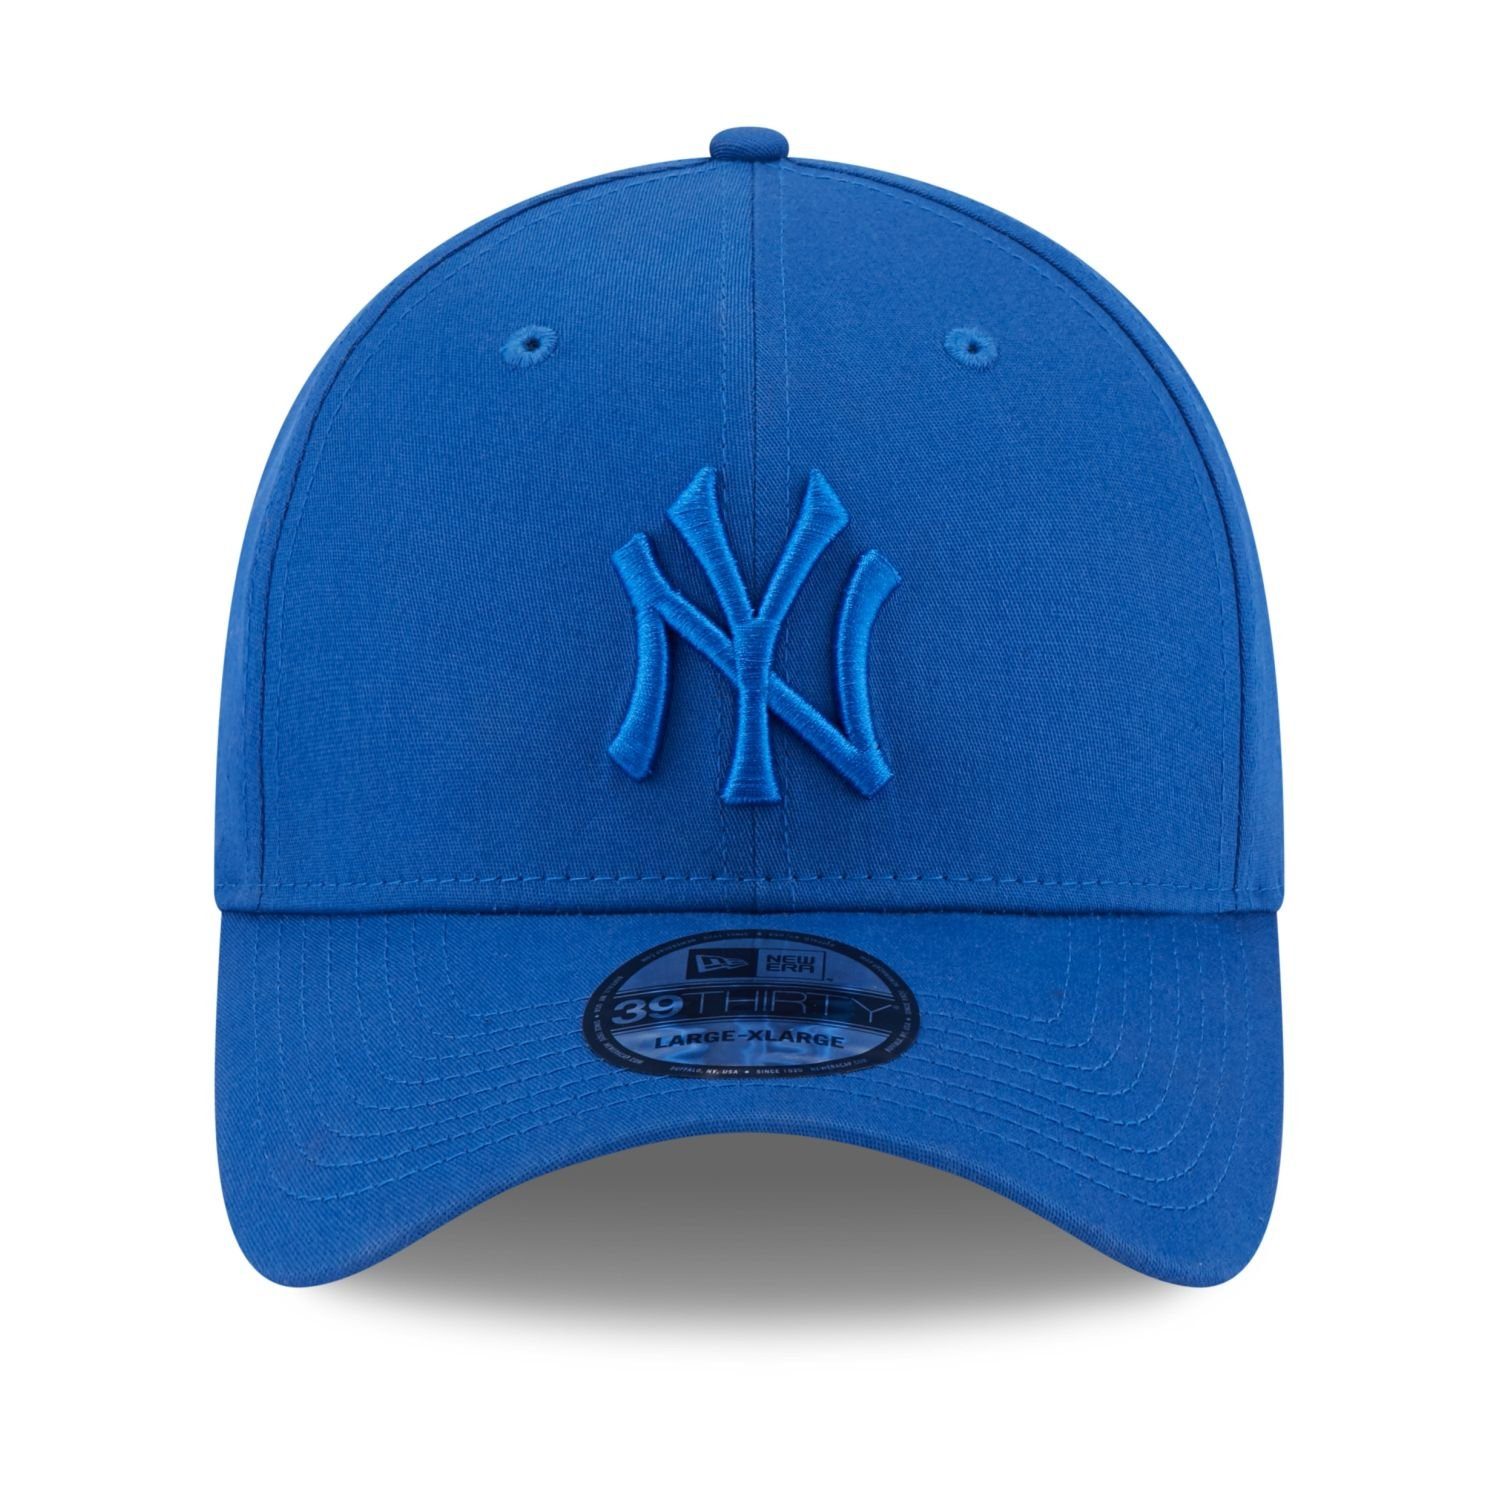 New Flex York New Yankees 39Thirty Cap Era Stretch